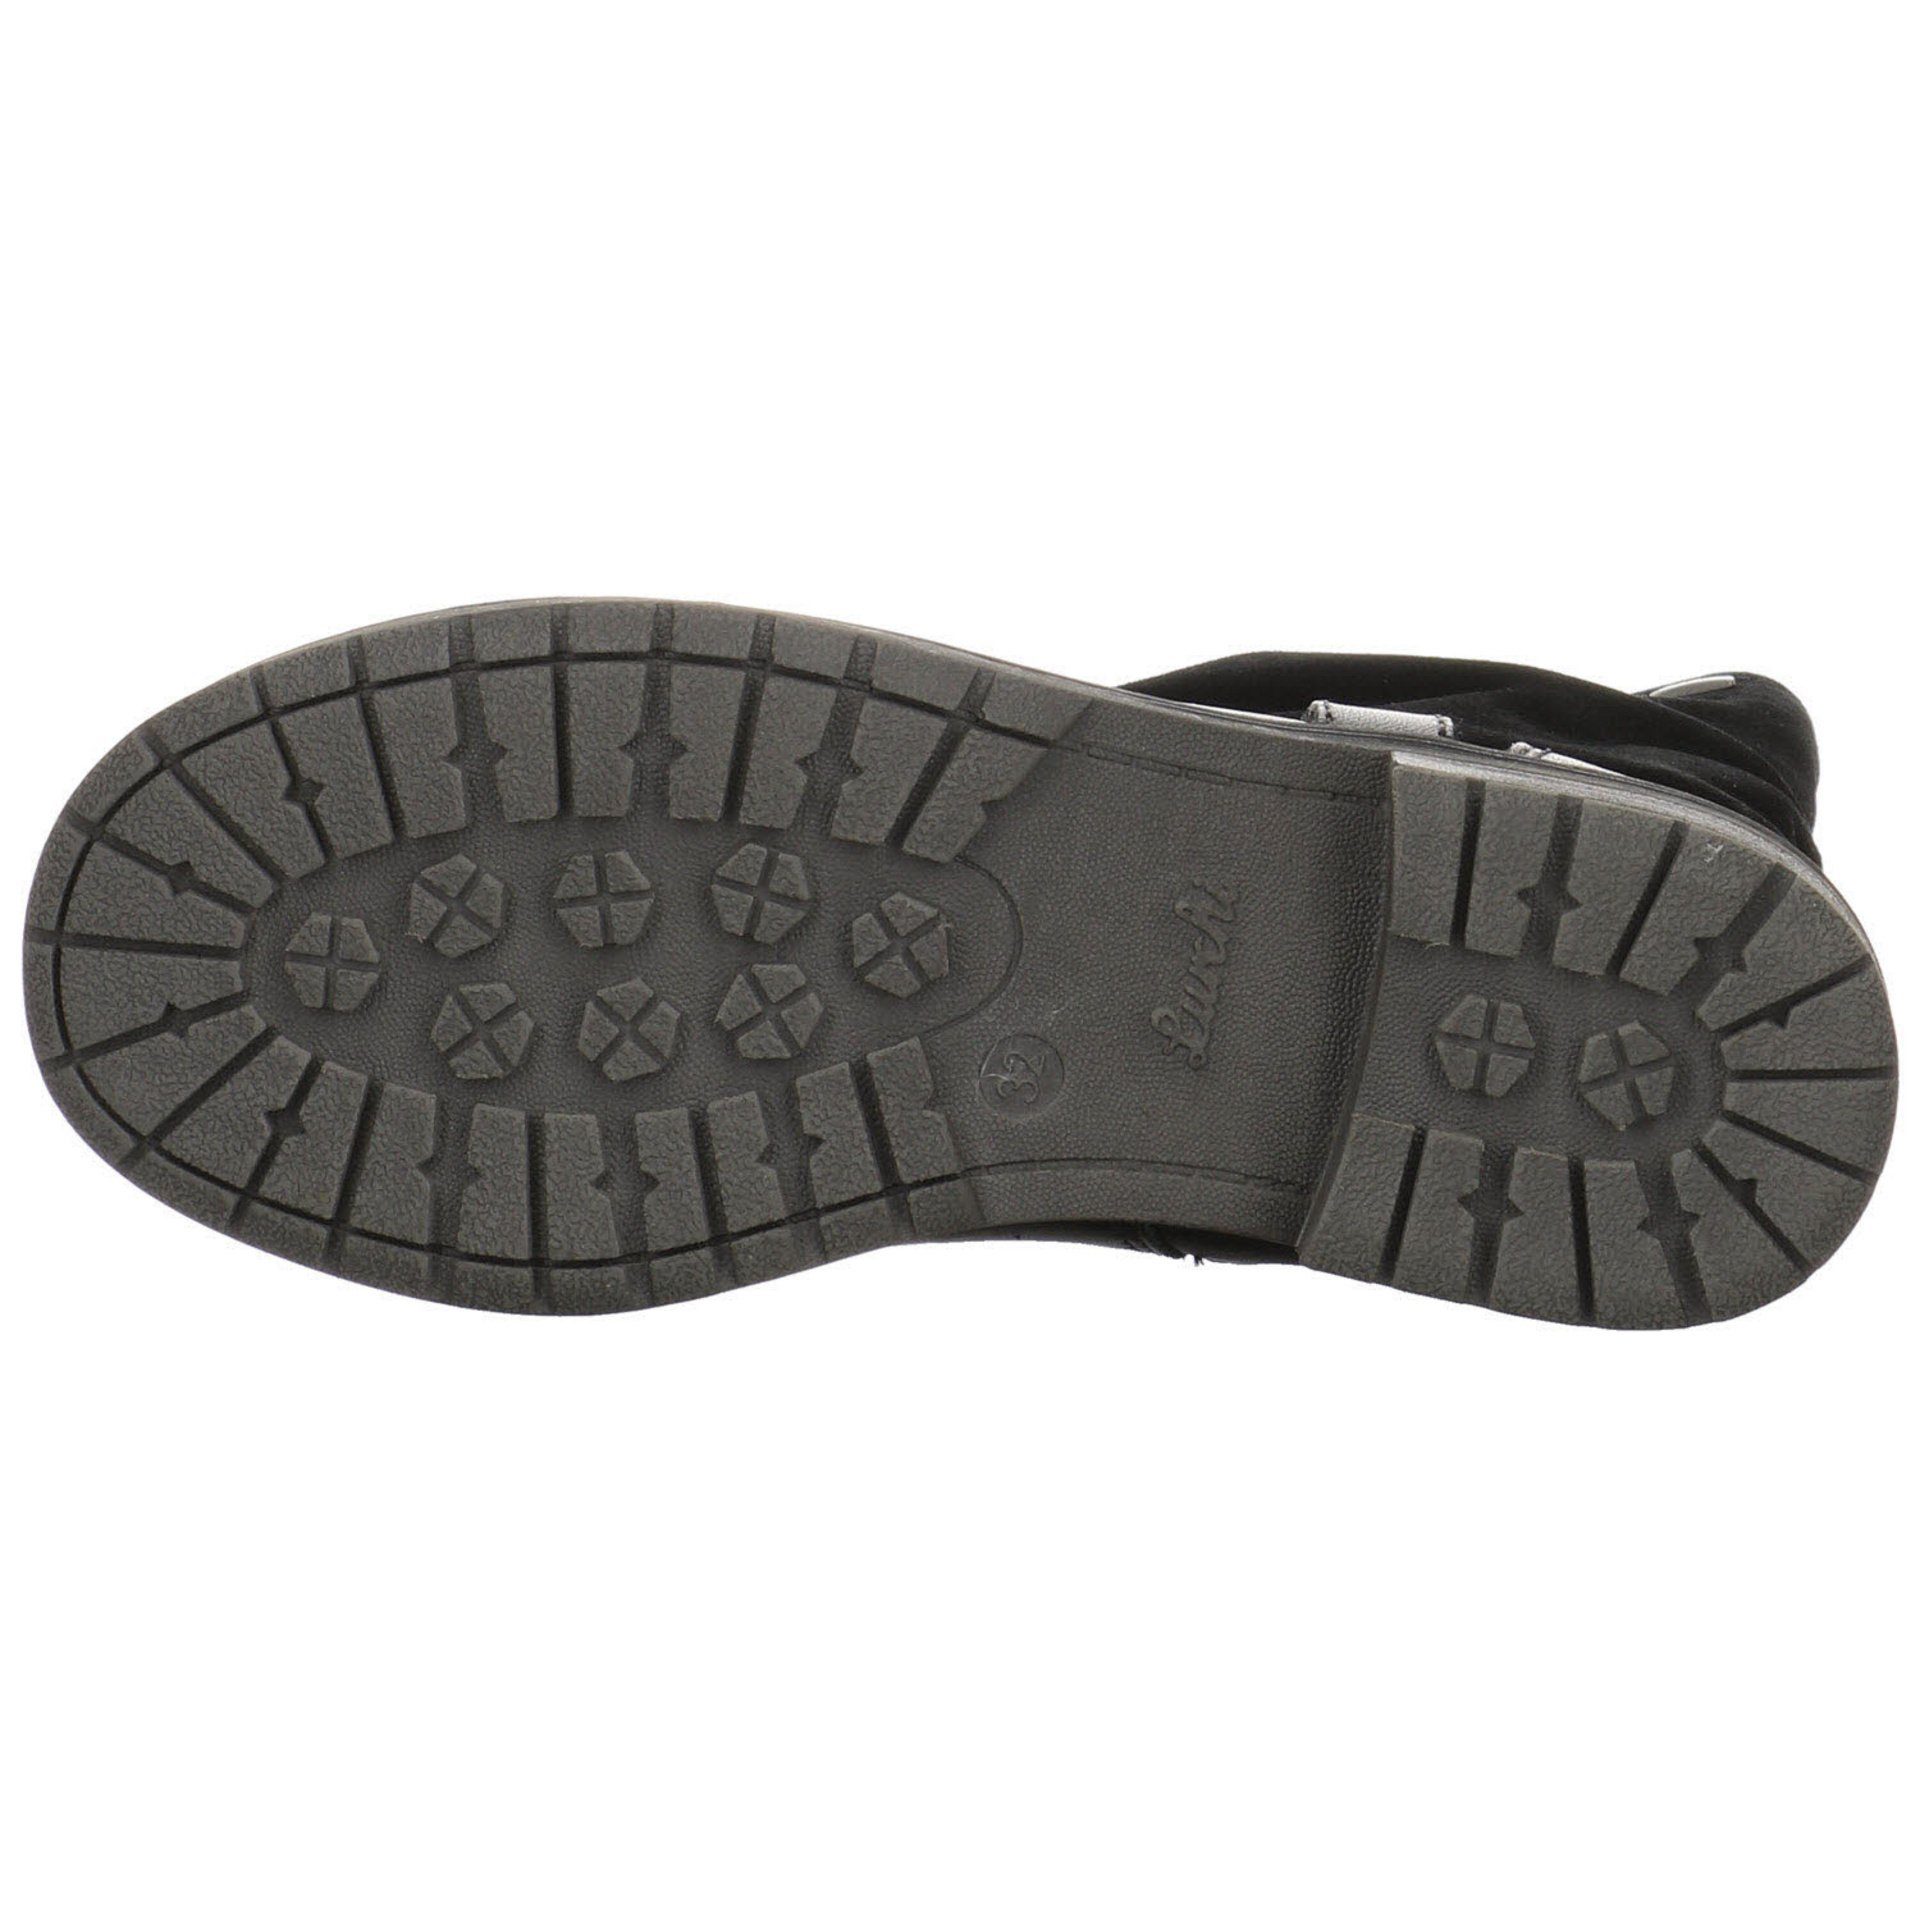 Mädchen Stiefel Lia-TEX Black Stiefel Lederkombination Stiefelette Schuhe Nappa Salamander Lurchi